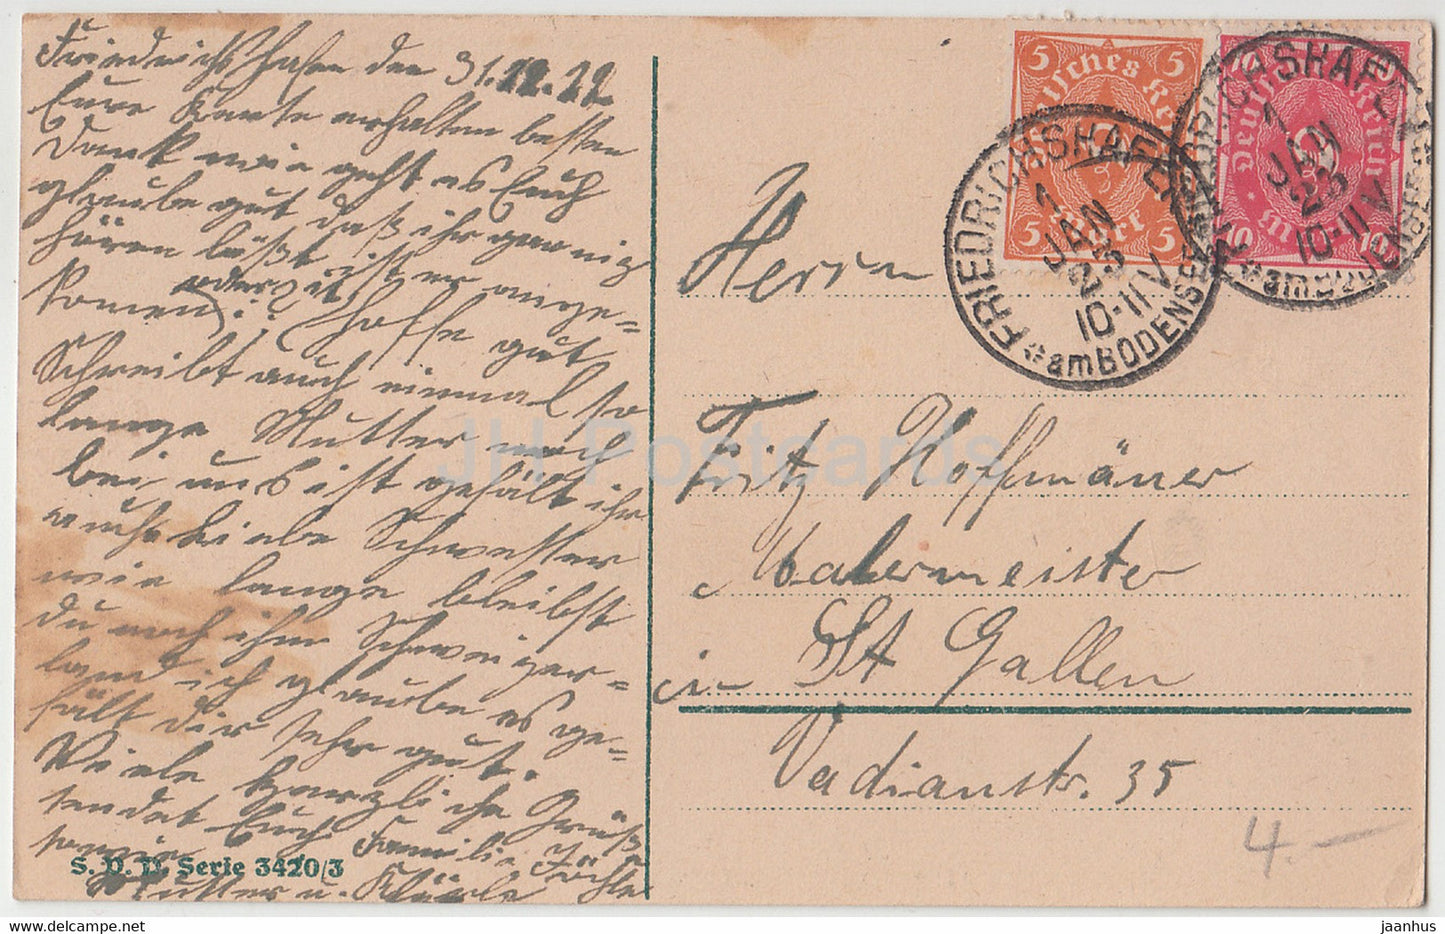 New Year Greeting Card - Ein Gluckliches neues Jahr - birds - blue tit - S V D - old postcard - 1923 - Germany - used